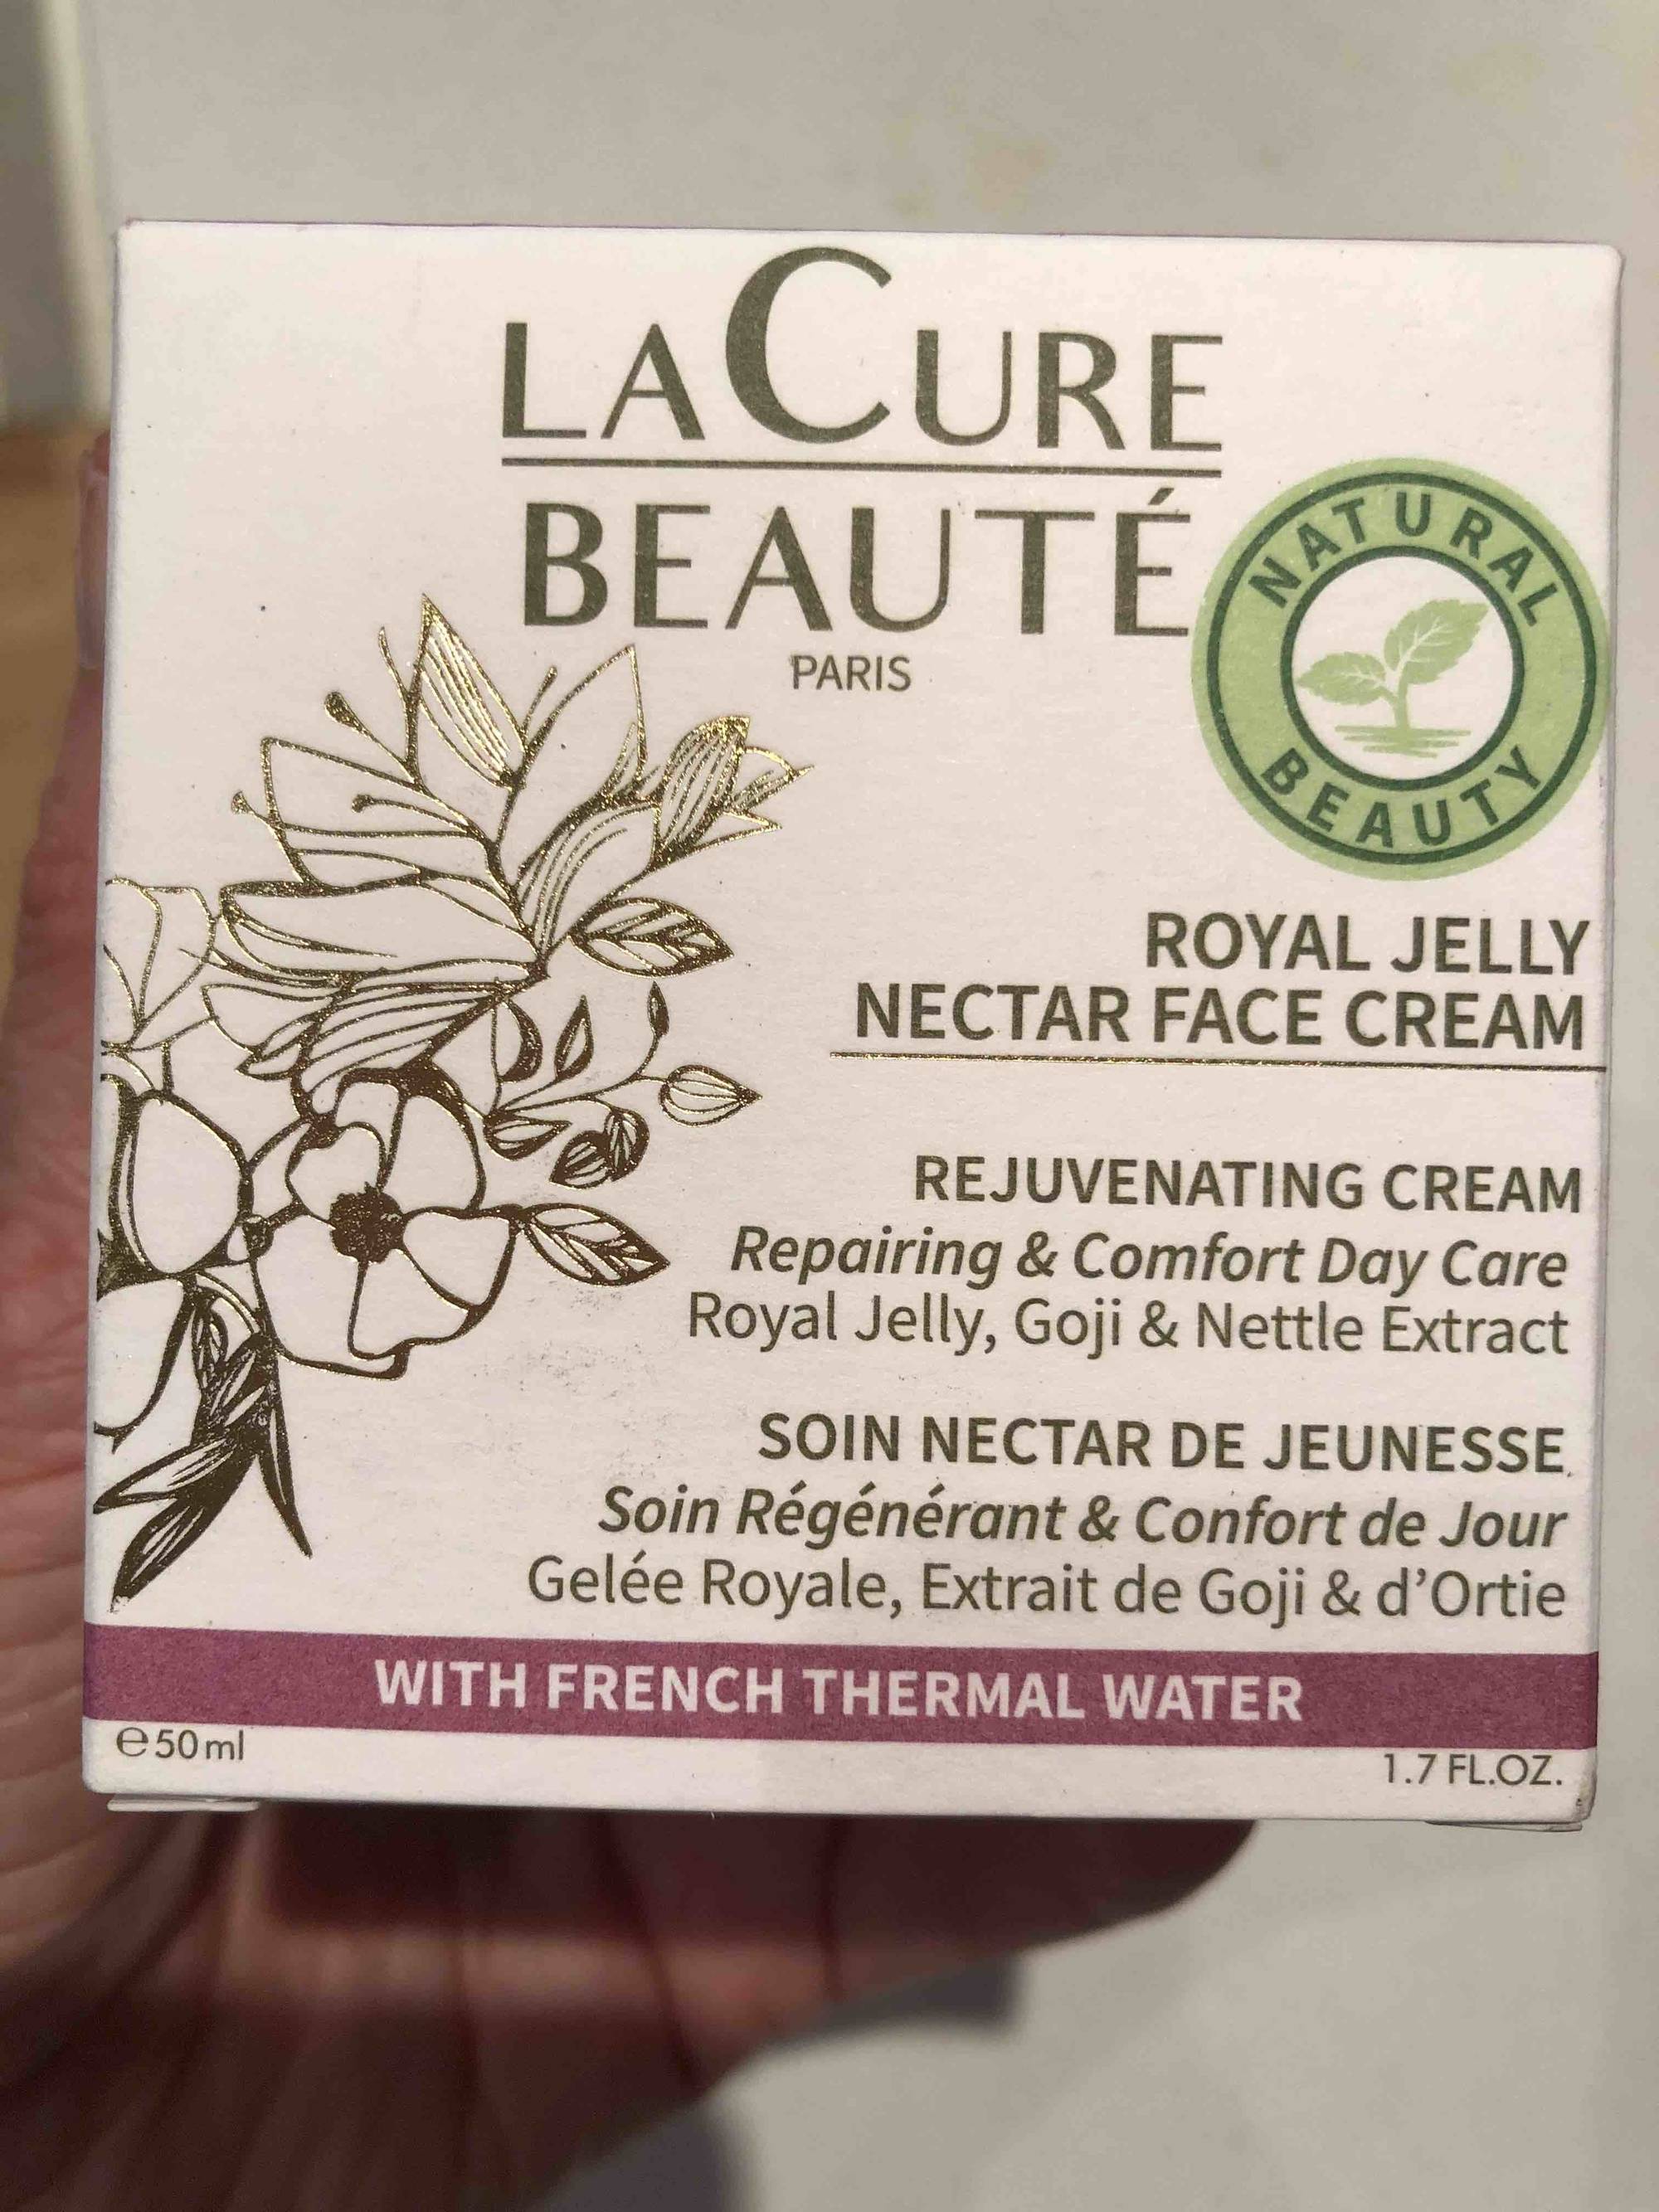 LA CURE BEAUTÉ - Royal jelly - Nectar face cream